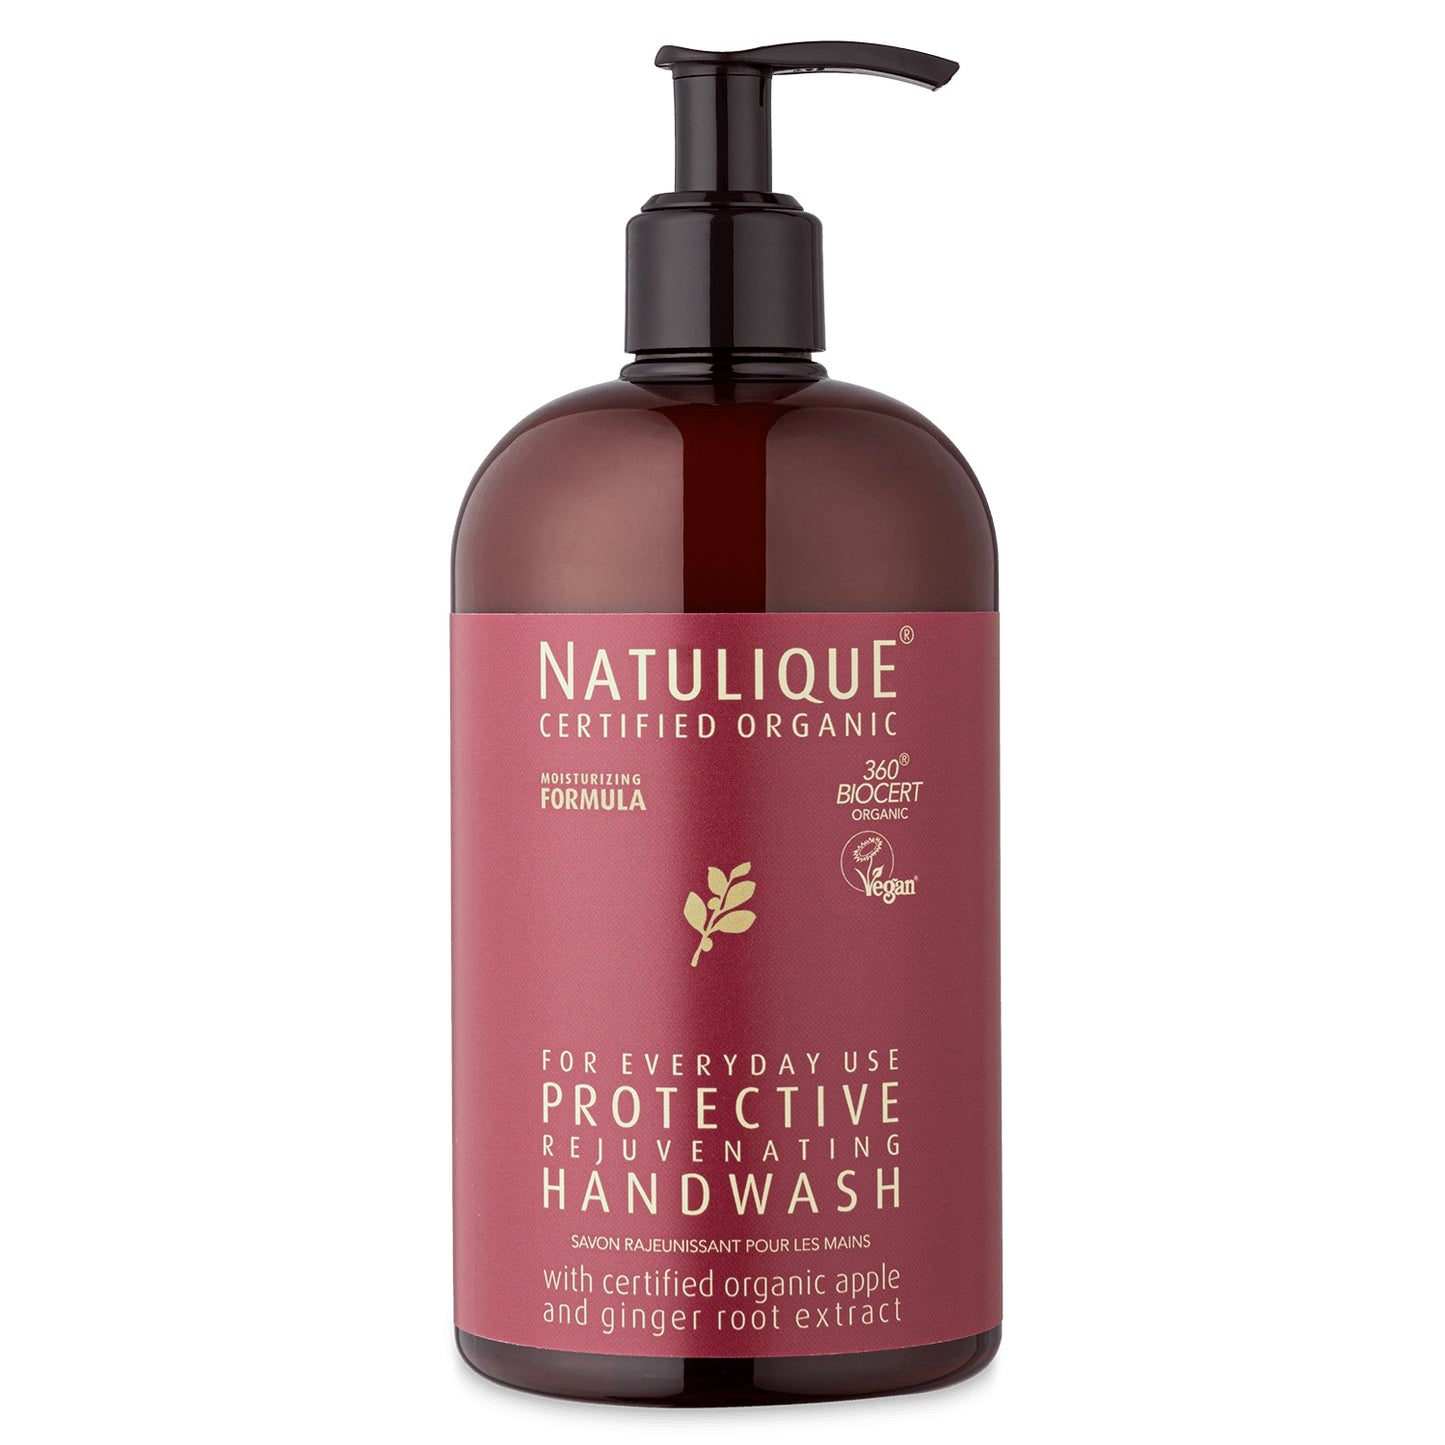 Natulique Protective Handwash